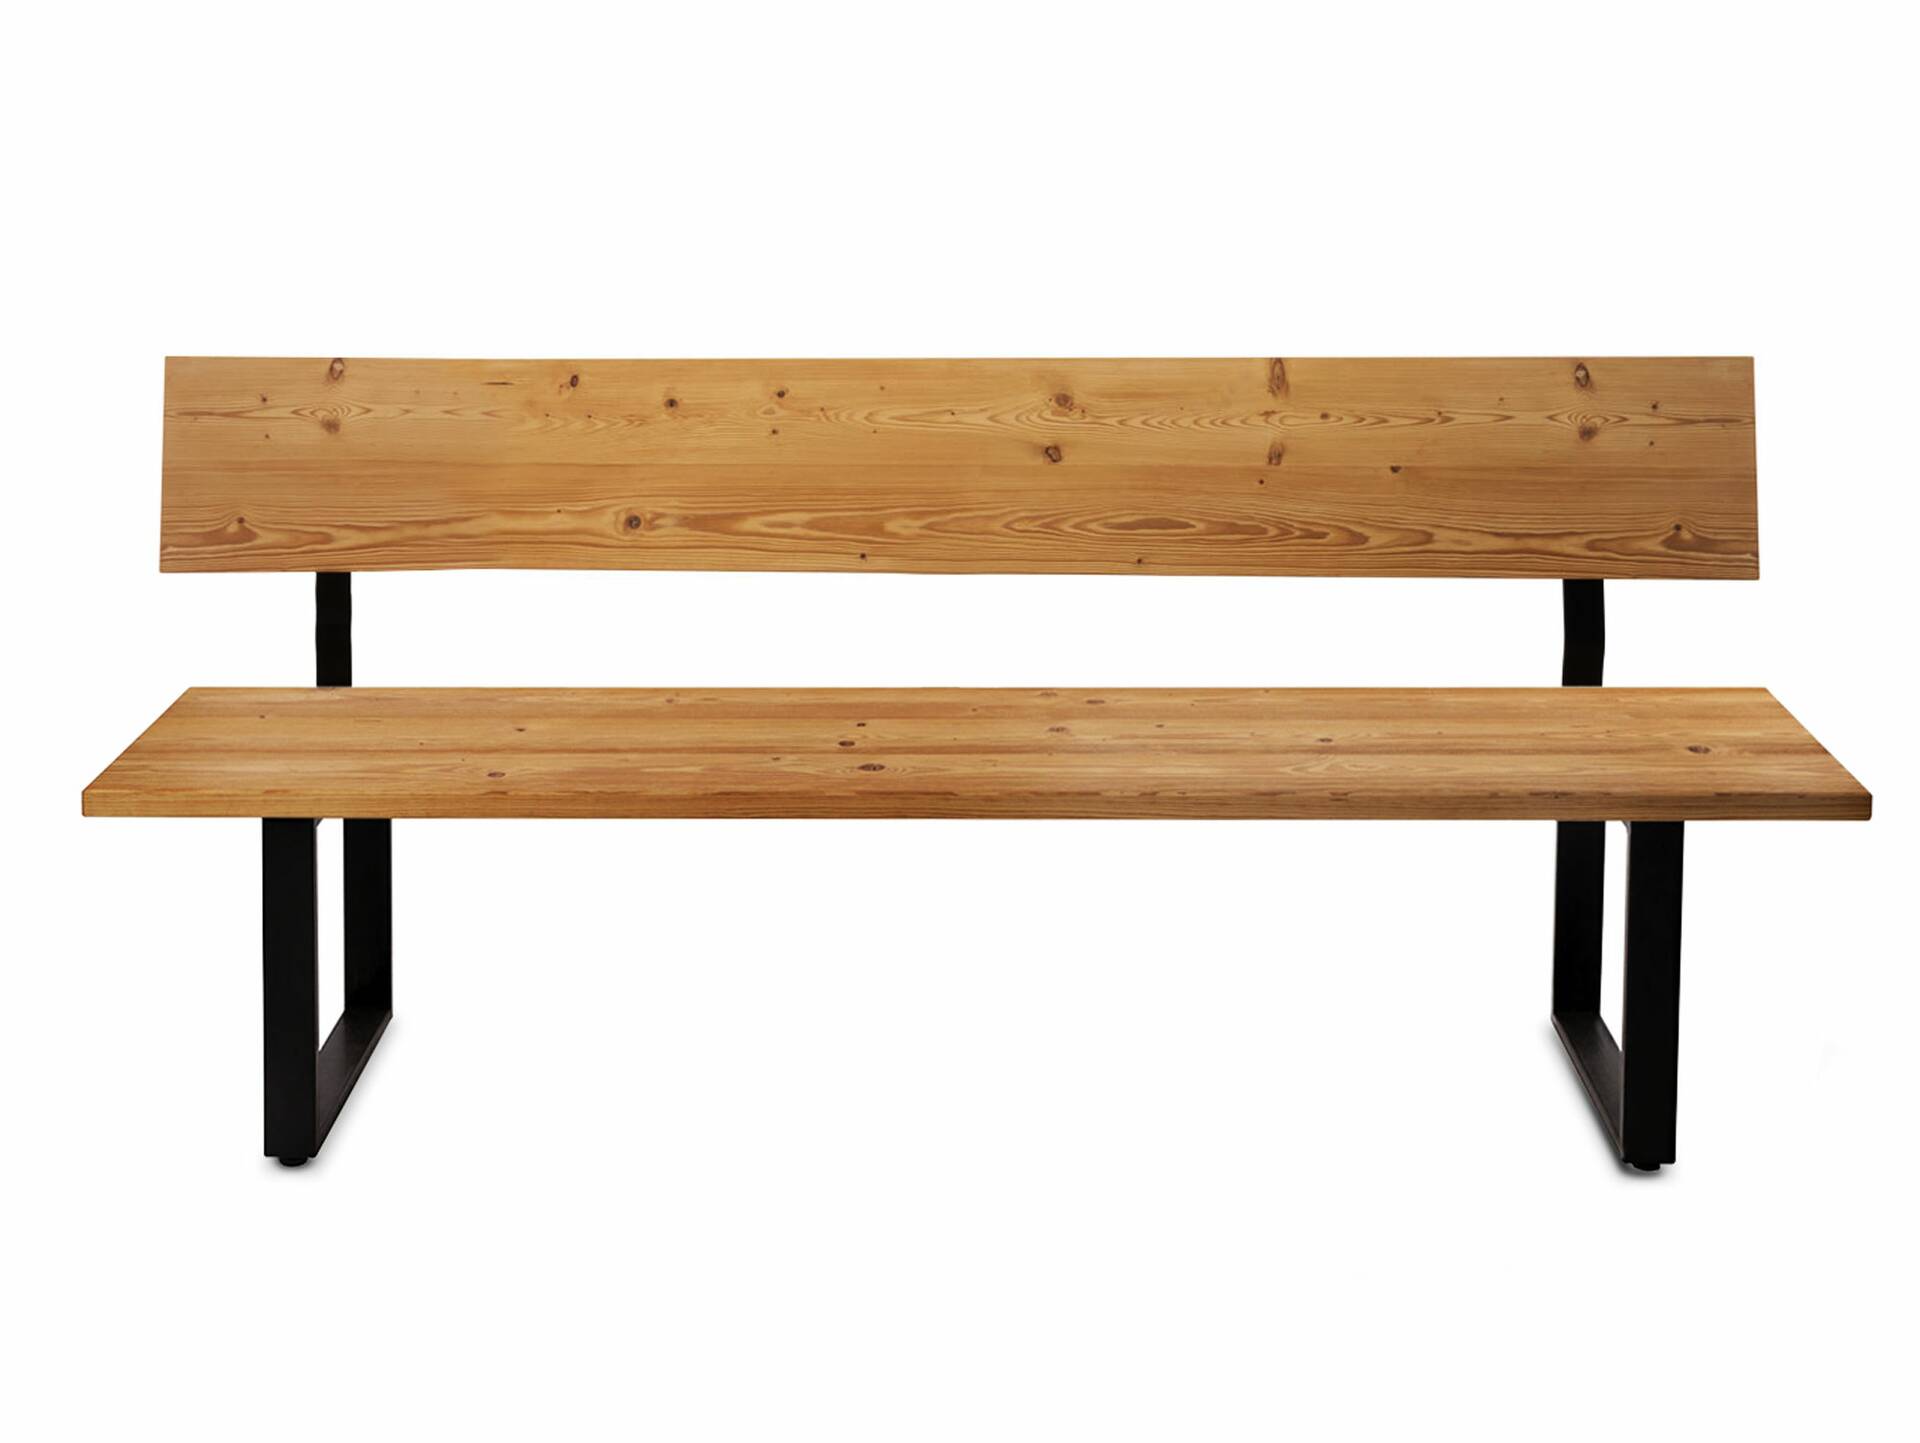 CURBY Sitzbank, rustikale Altholzoptik, Material Massivholz, Fichte gebürstet 140 cm | natur | mit Rückenlehne | ohne Sitzkissen